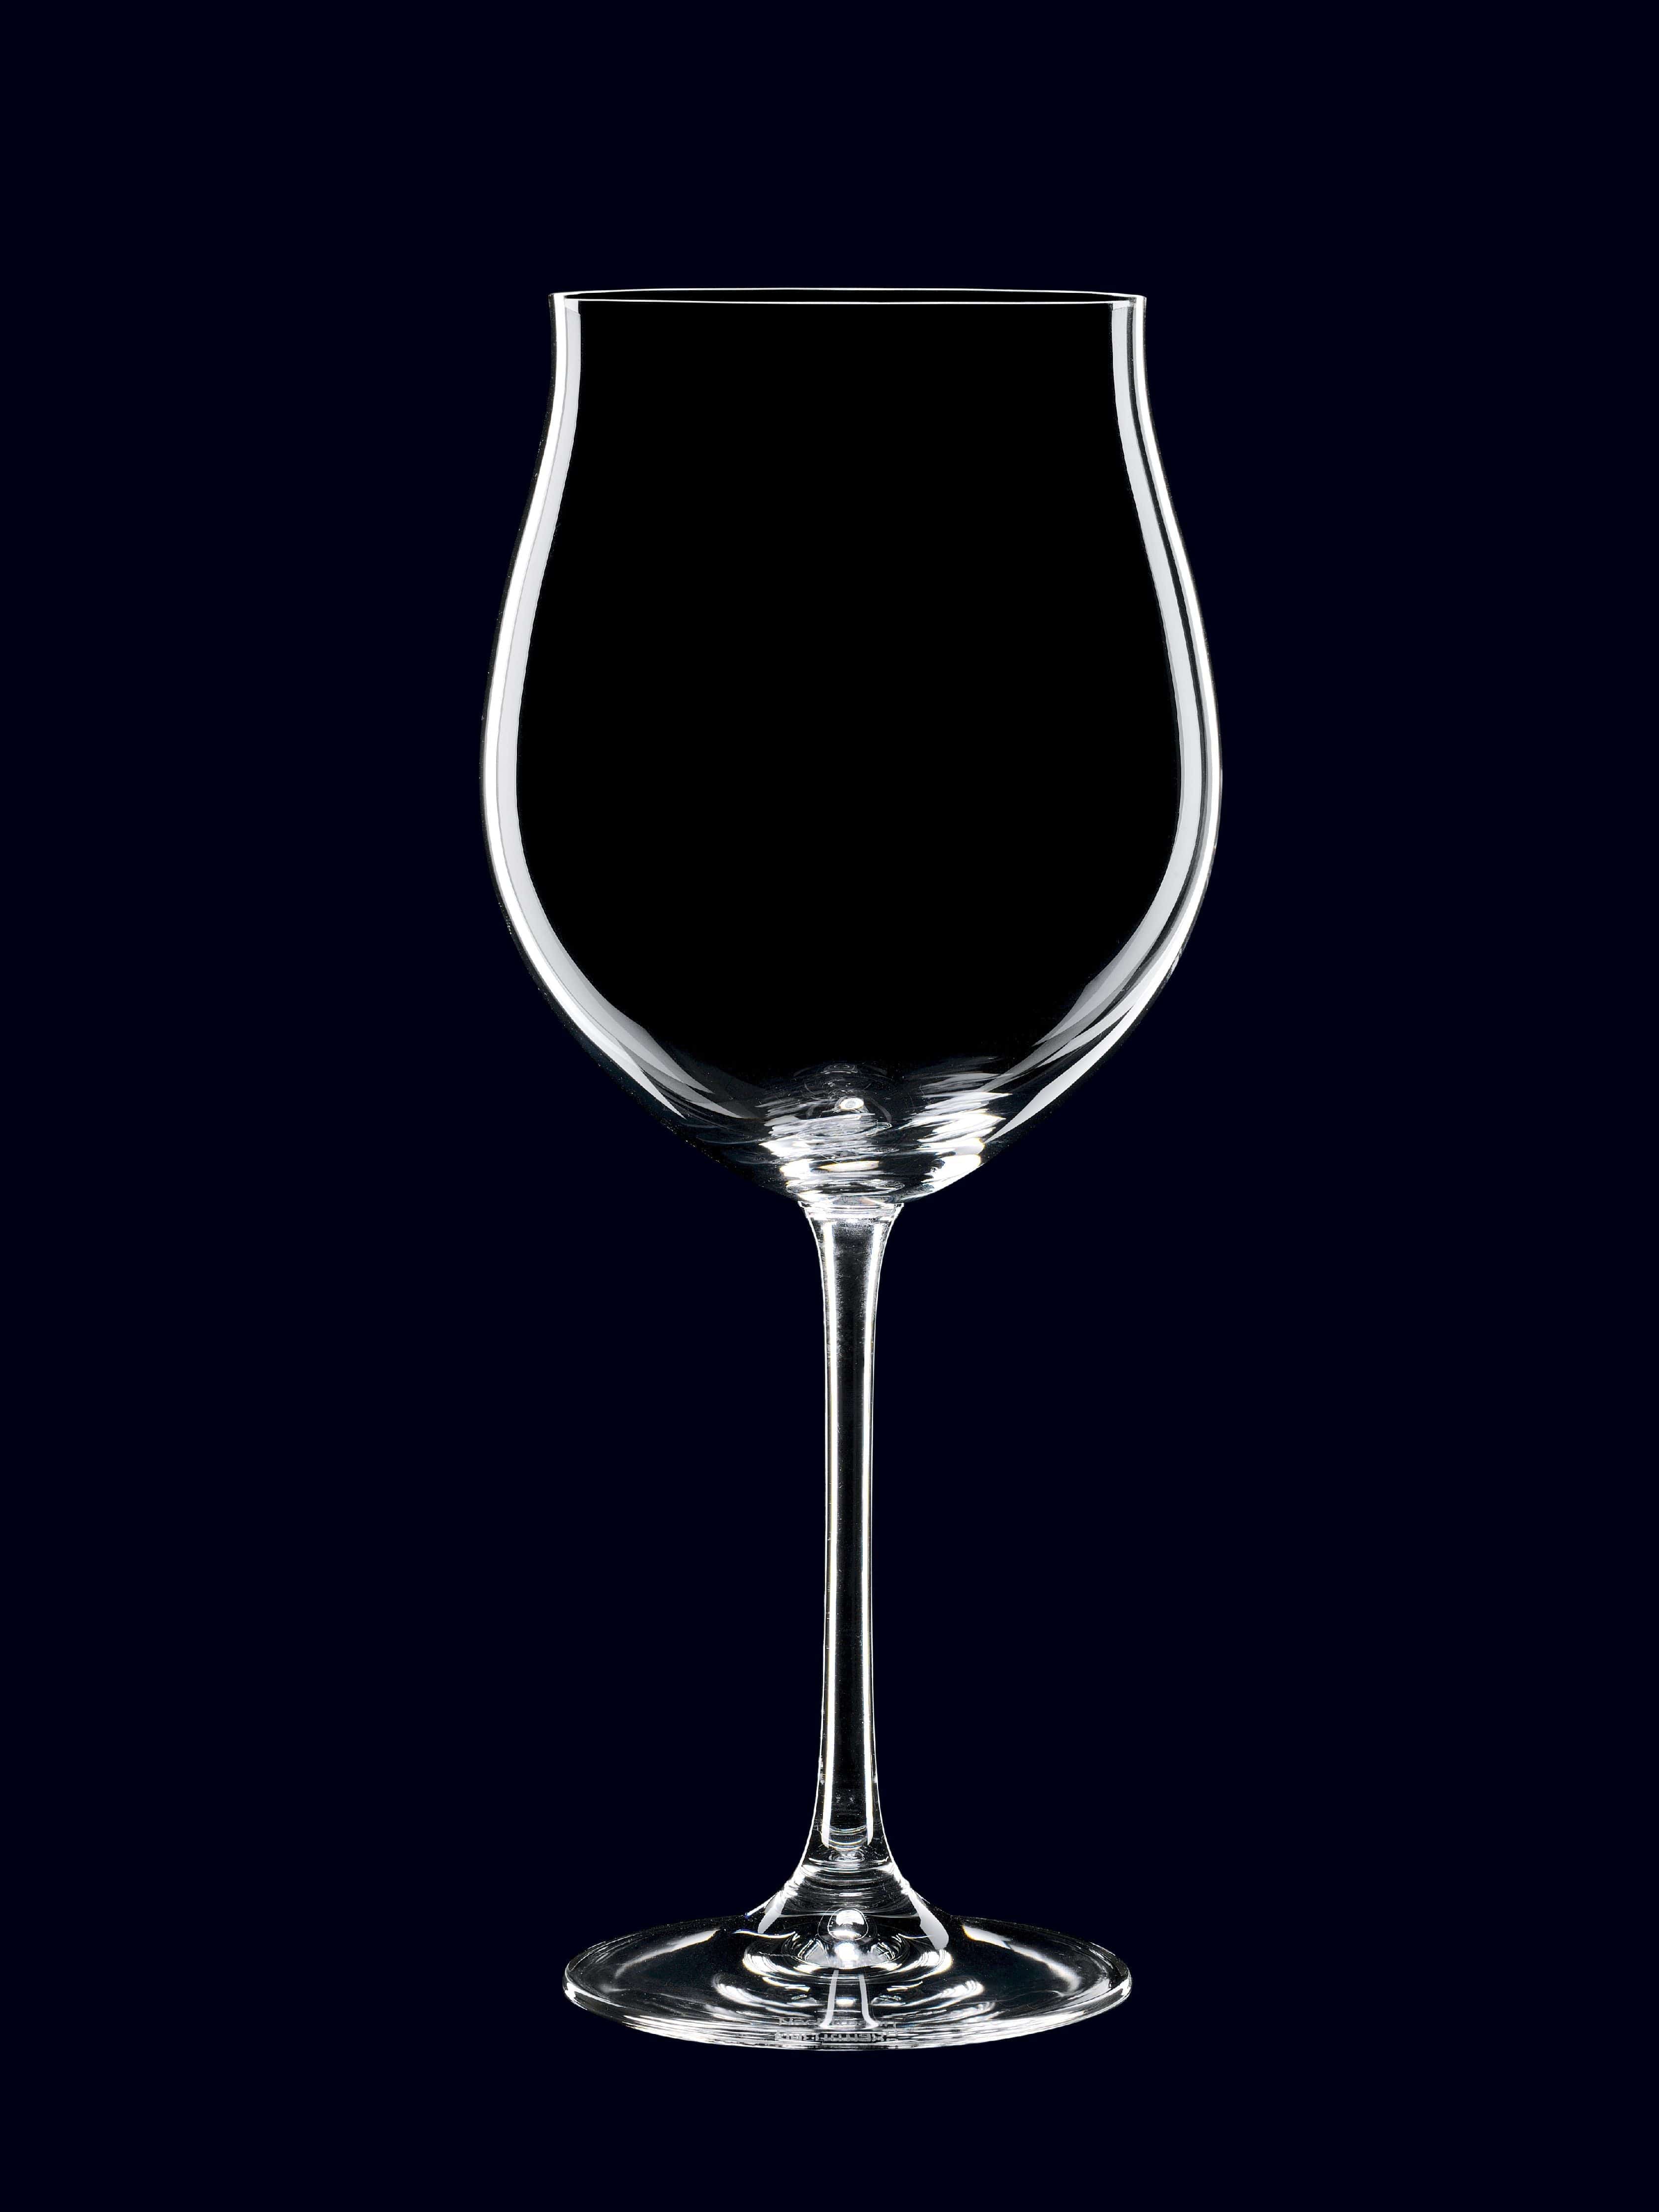 Nachtmann Vivendi Premium Pinot noir vinglas 897 ml, 4 st.